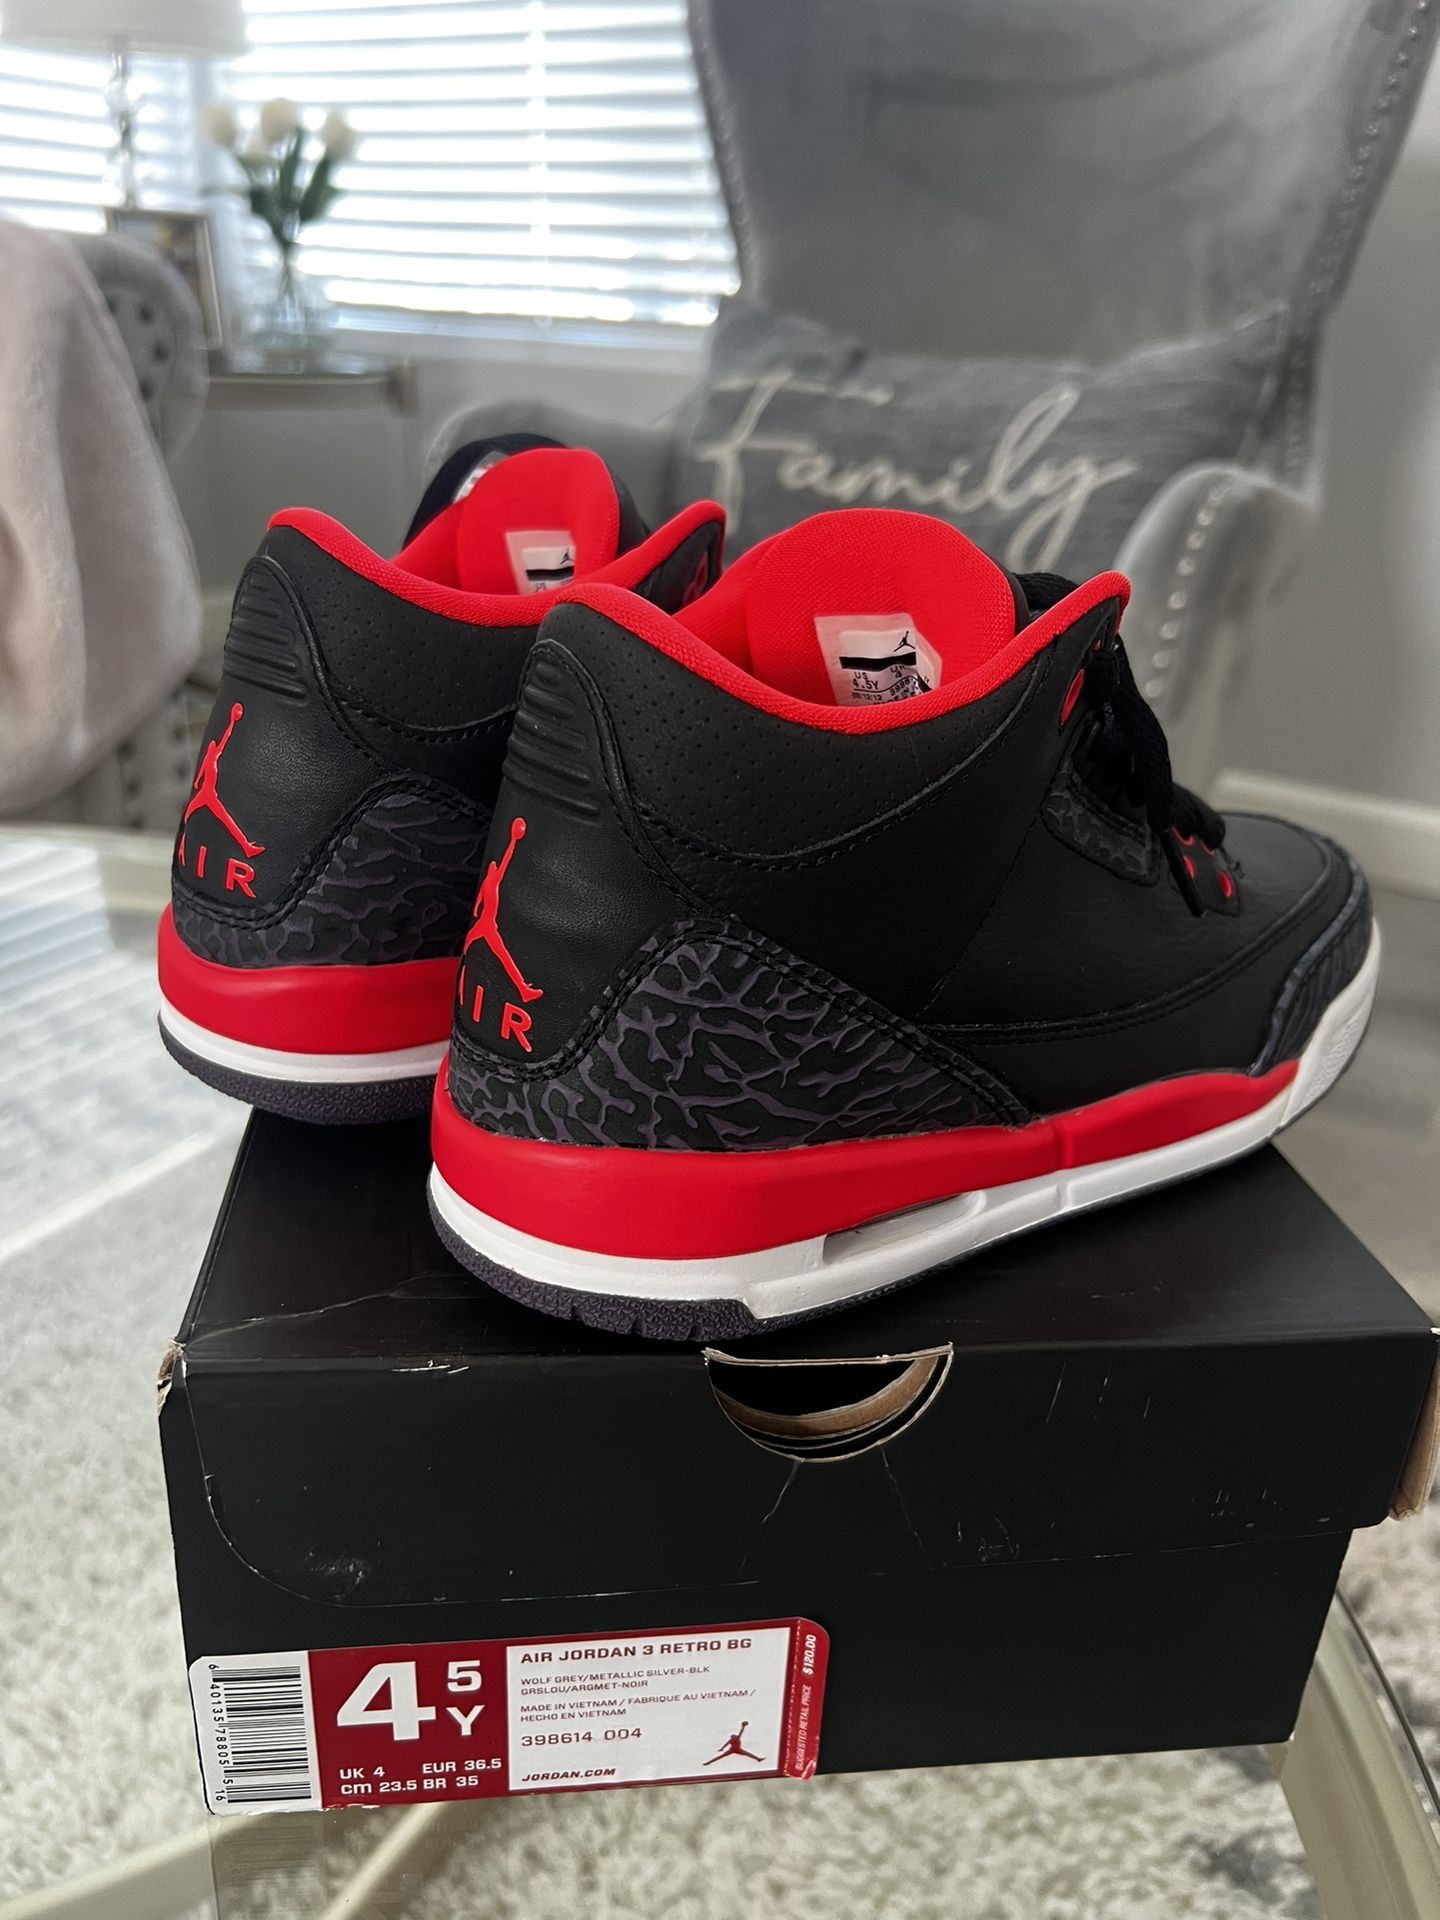 Air Jordan Size 4.5